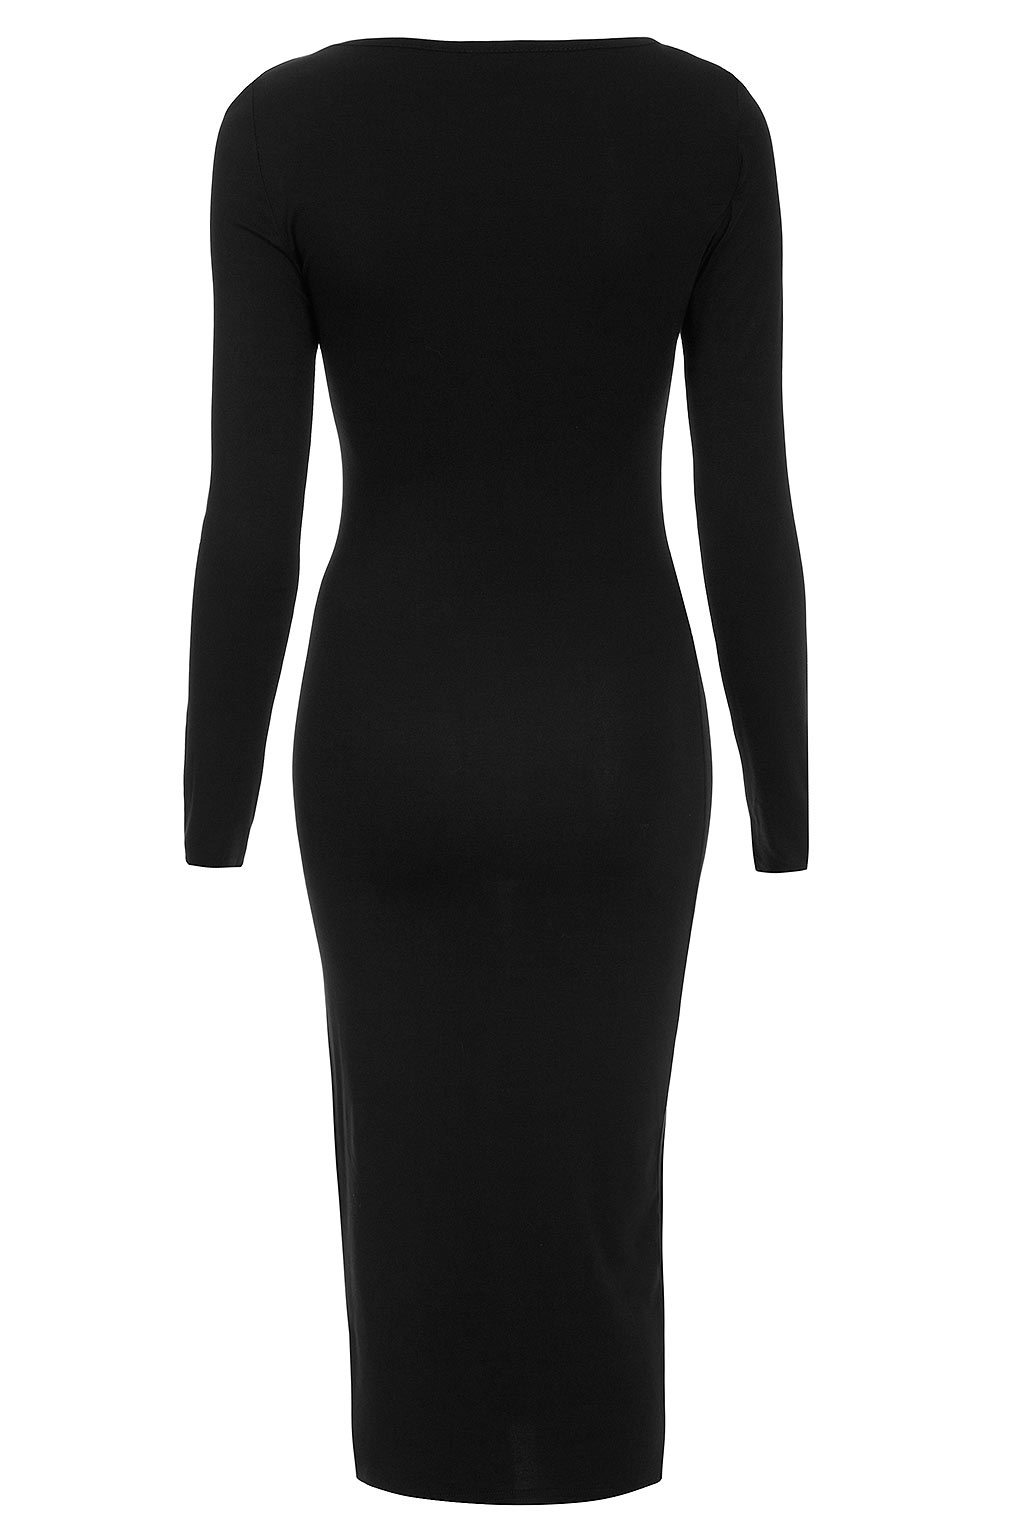 Topshop Plain Midi Bodycon Dress in Black | Lyst